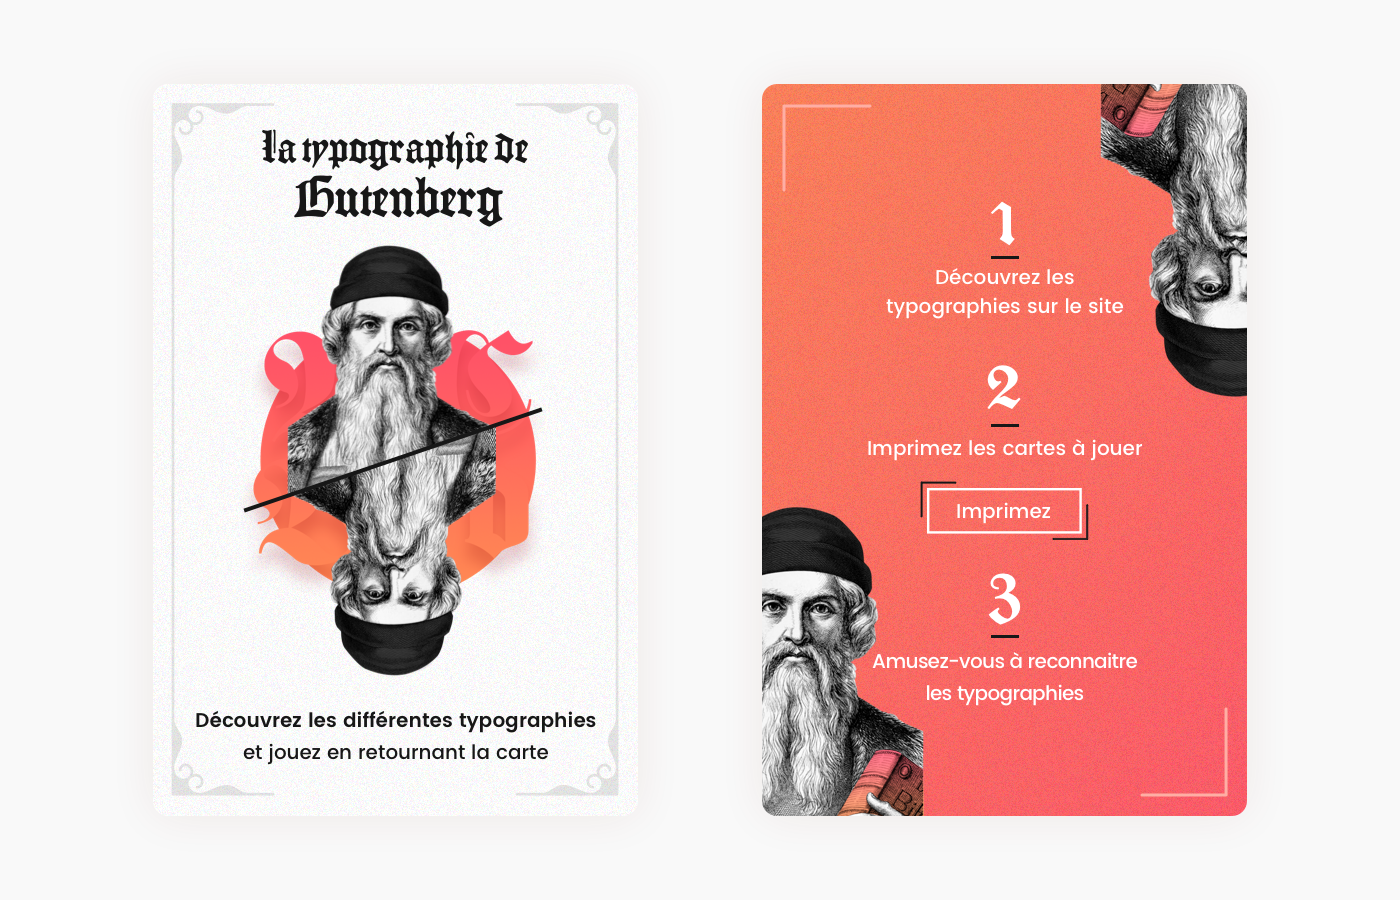 graphisme ui design Art Director typography   design editorial Gutenberg fatma aroua card game char